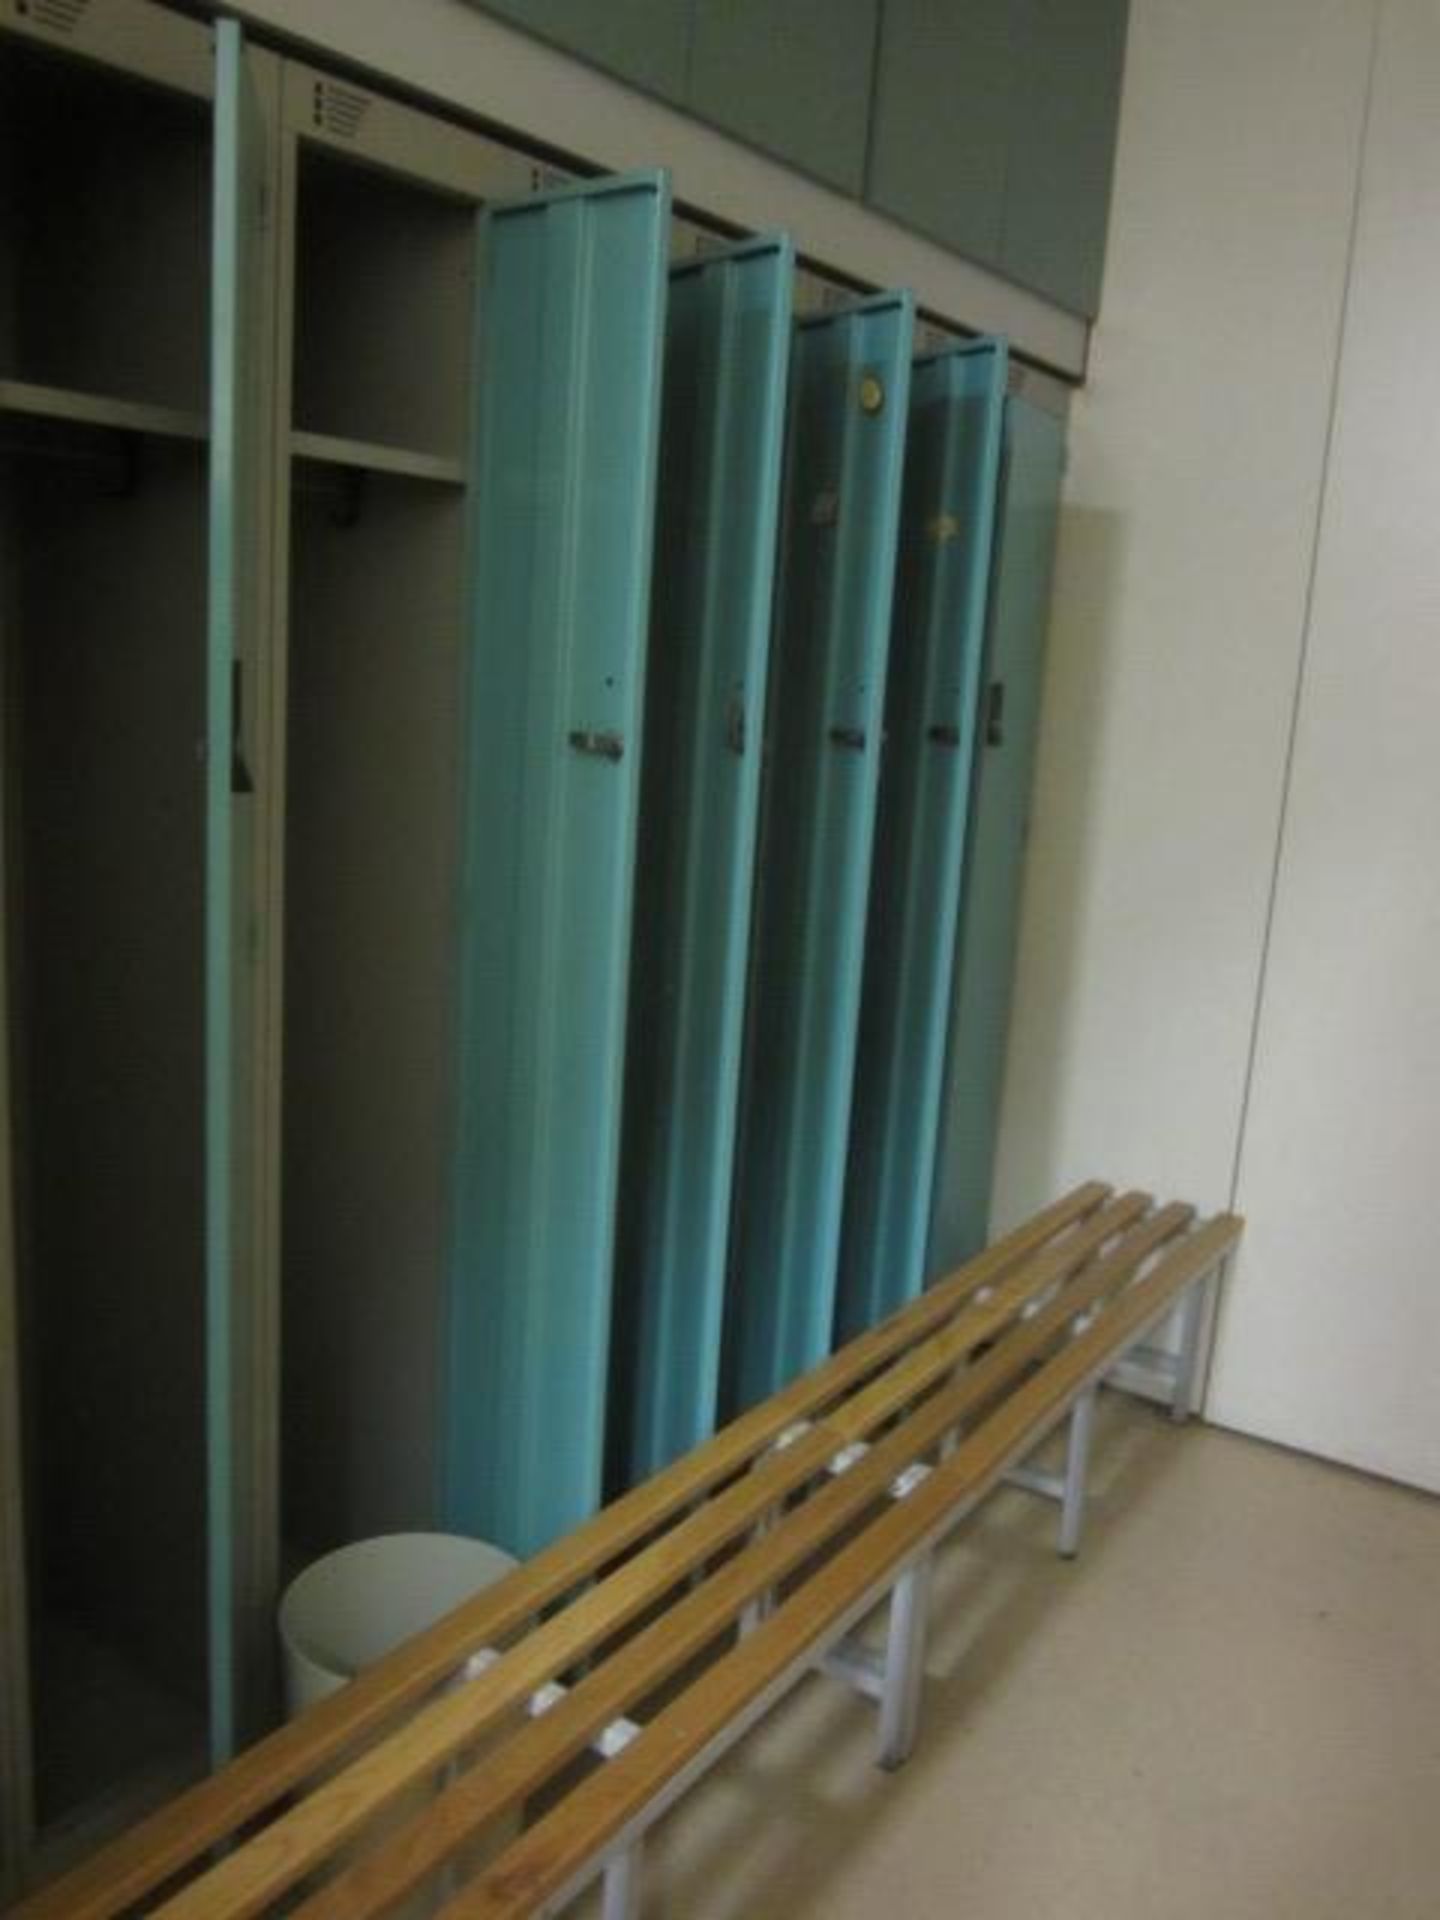 Eight metal single door personnel lockers and slatted bench